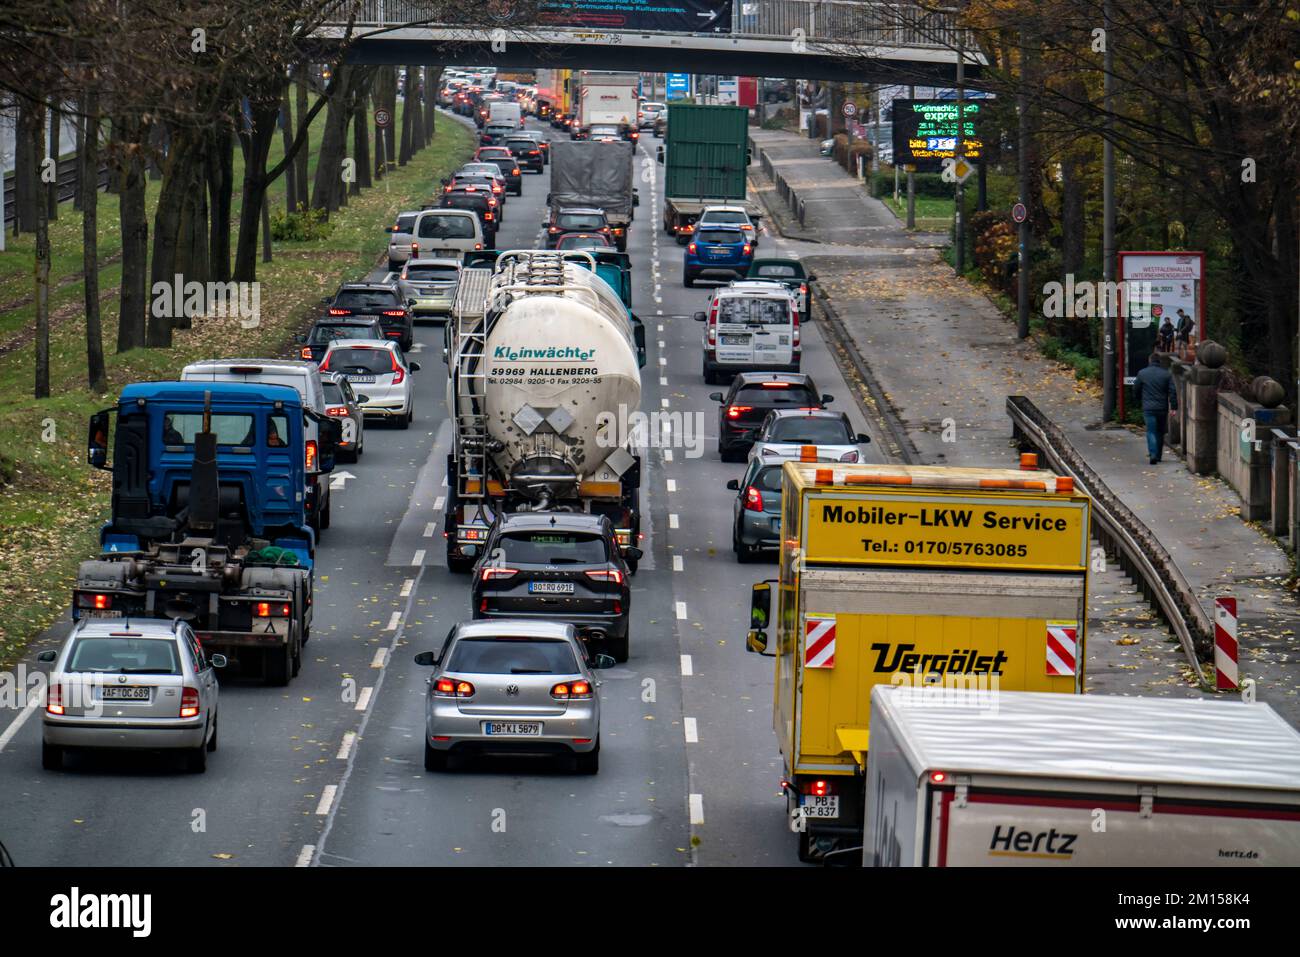 Traffico cittadino interno, Westfalendamm a 3 corsie, B1 strada federale, traffico pesante, NRW, Germania, Dortmund, Foto Stock